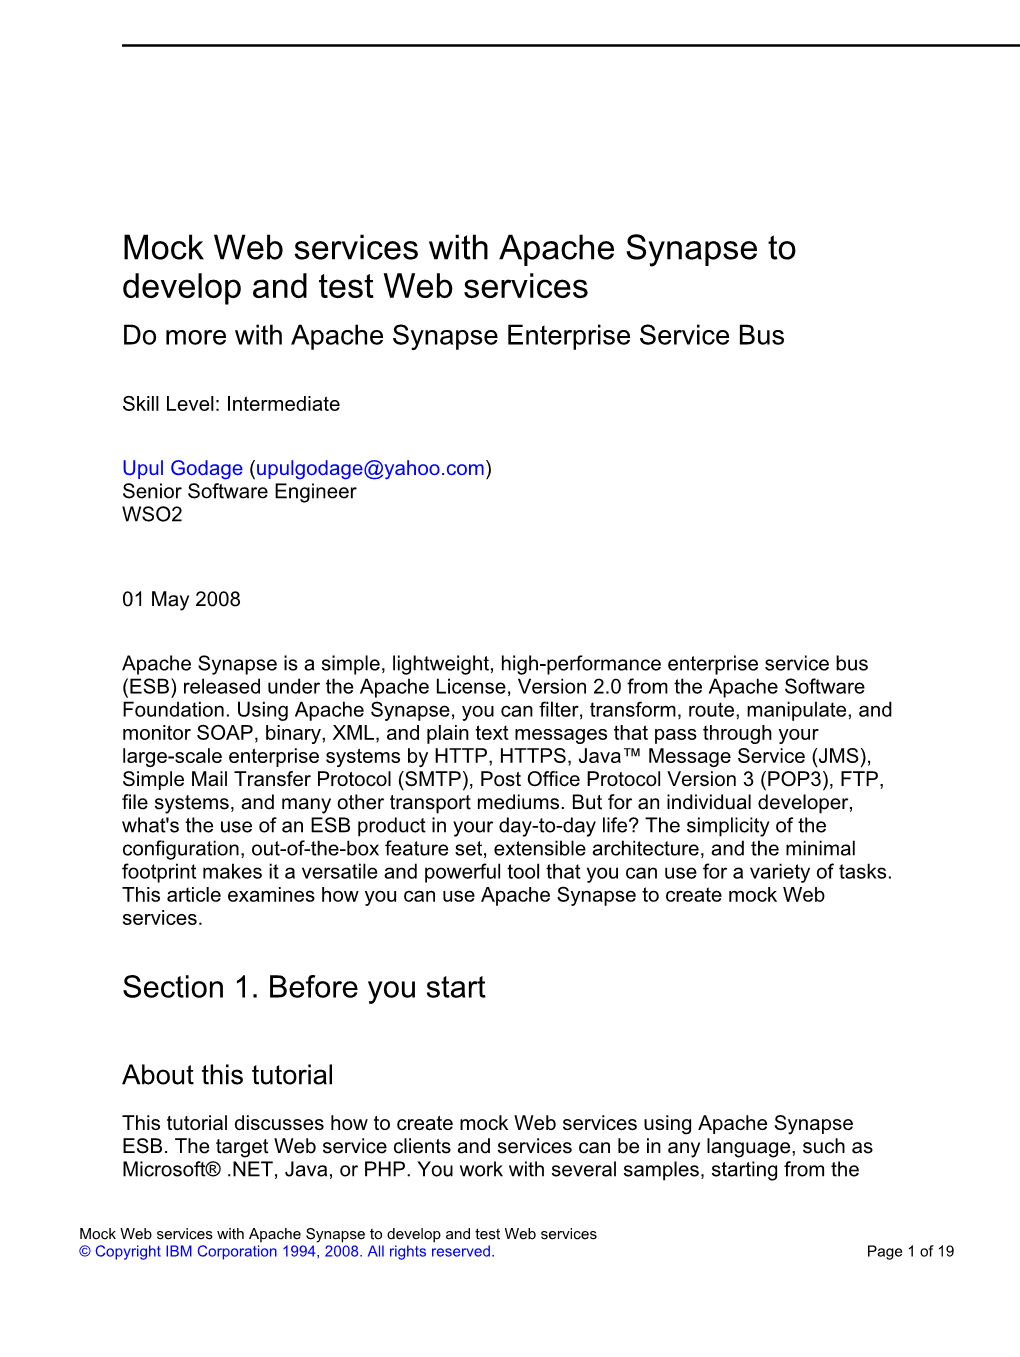 Mock Web Services with Apache Synapse to Develop and Test Web Services Do More with Apache Synapse Enterprise Service Bus